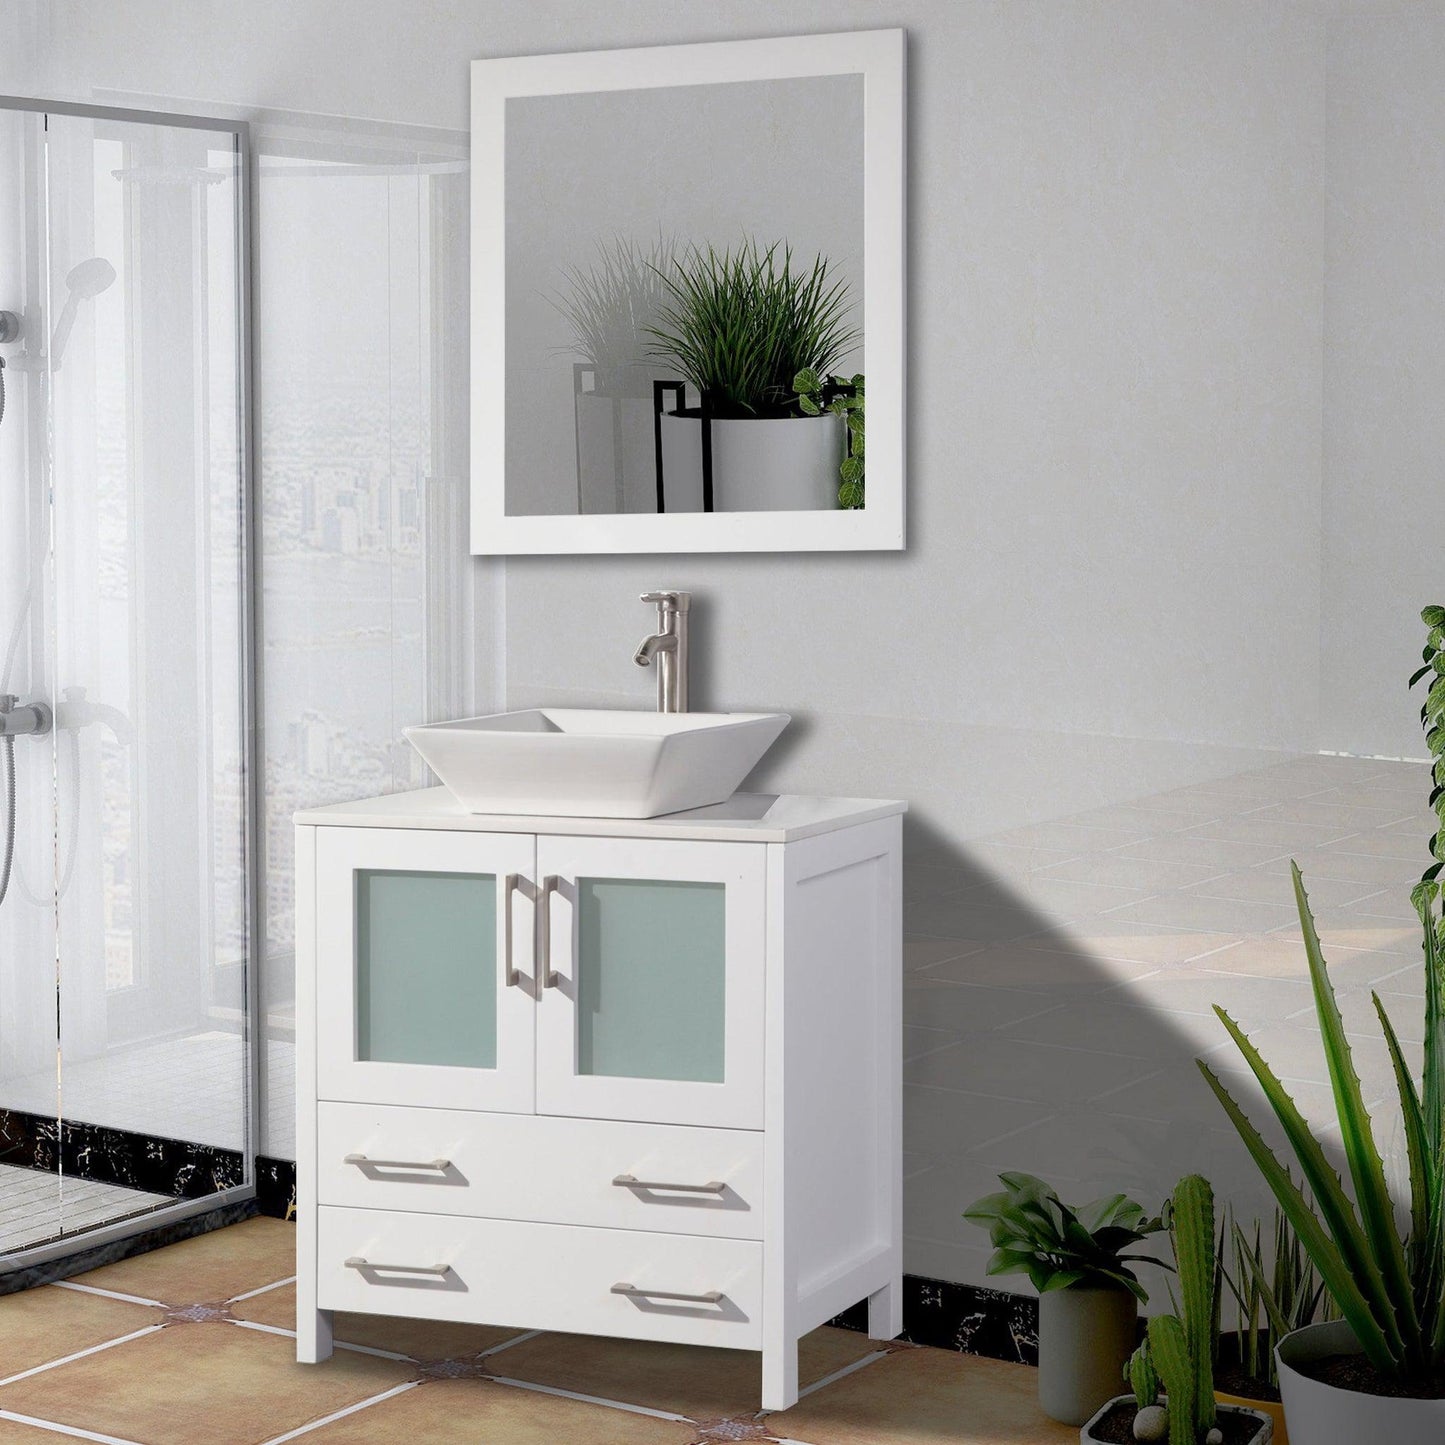 Vanity Art Ravenna 30" Single White Freestanding Vanity Set With White Engineered Marble Top, Ceramic Vessel Sink, and Mirror